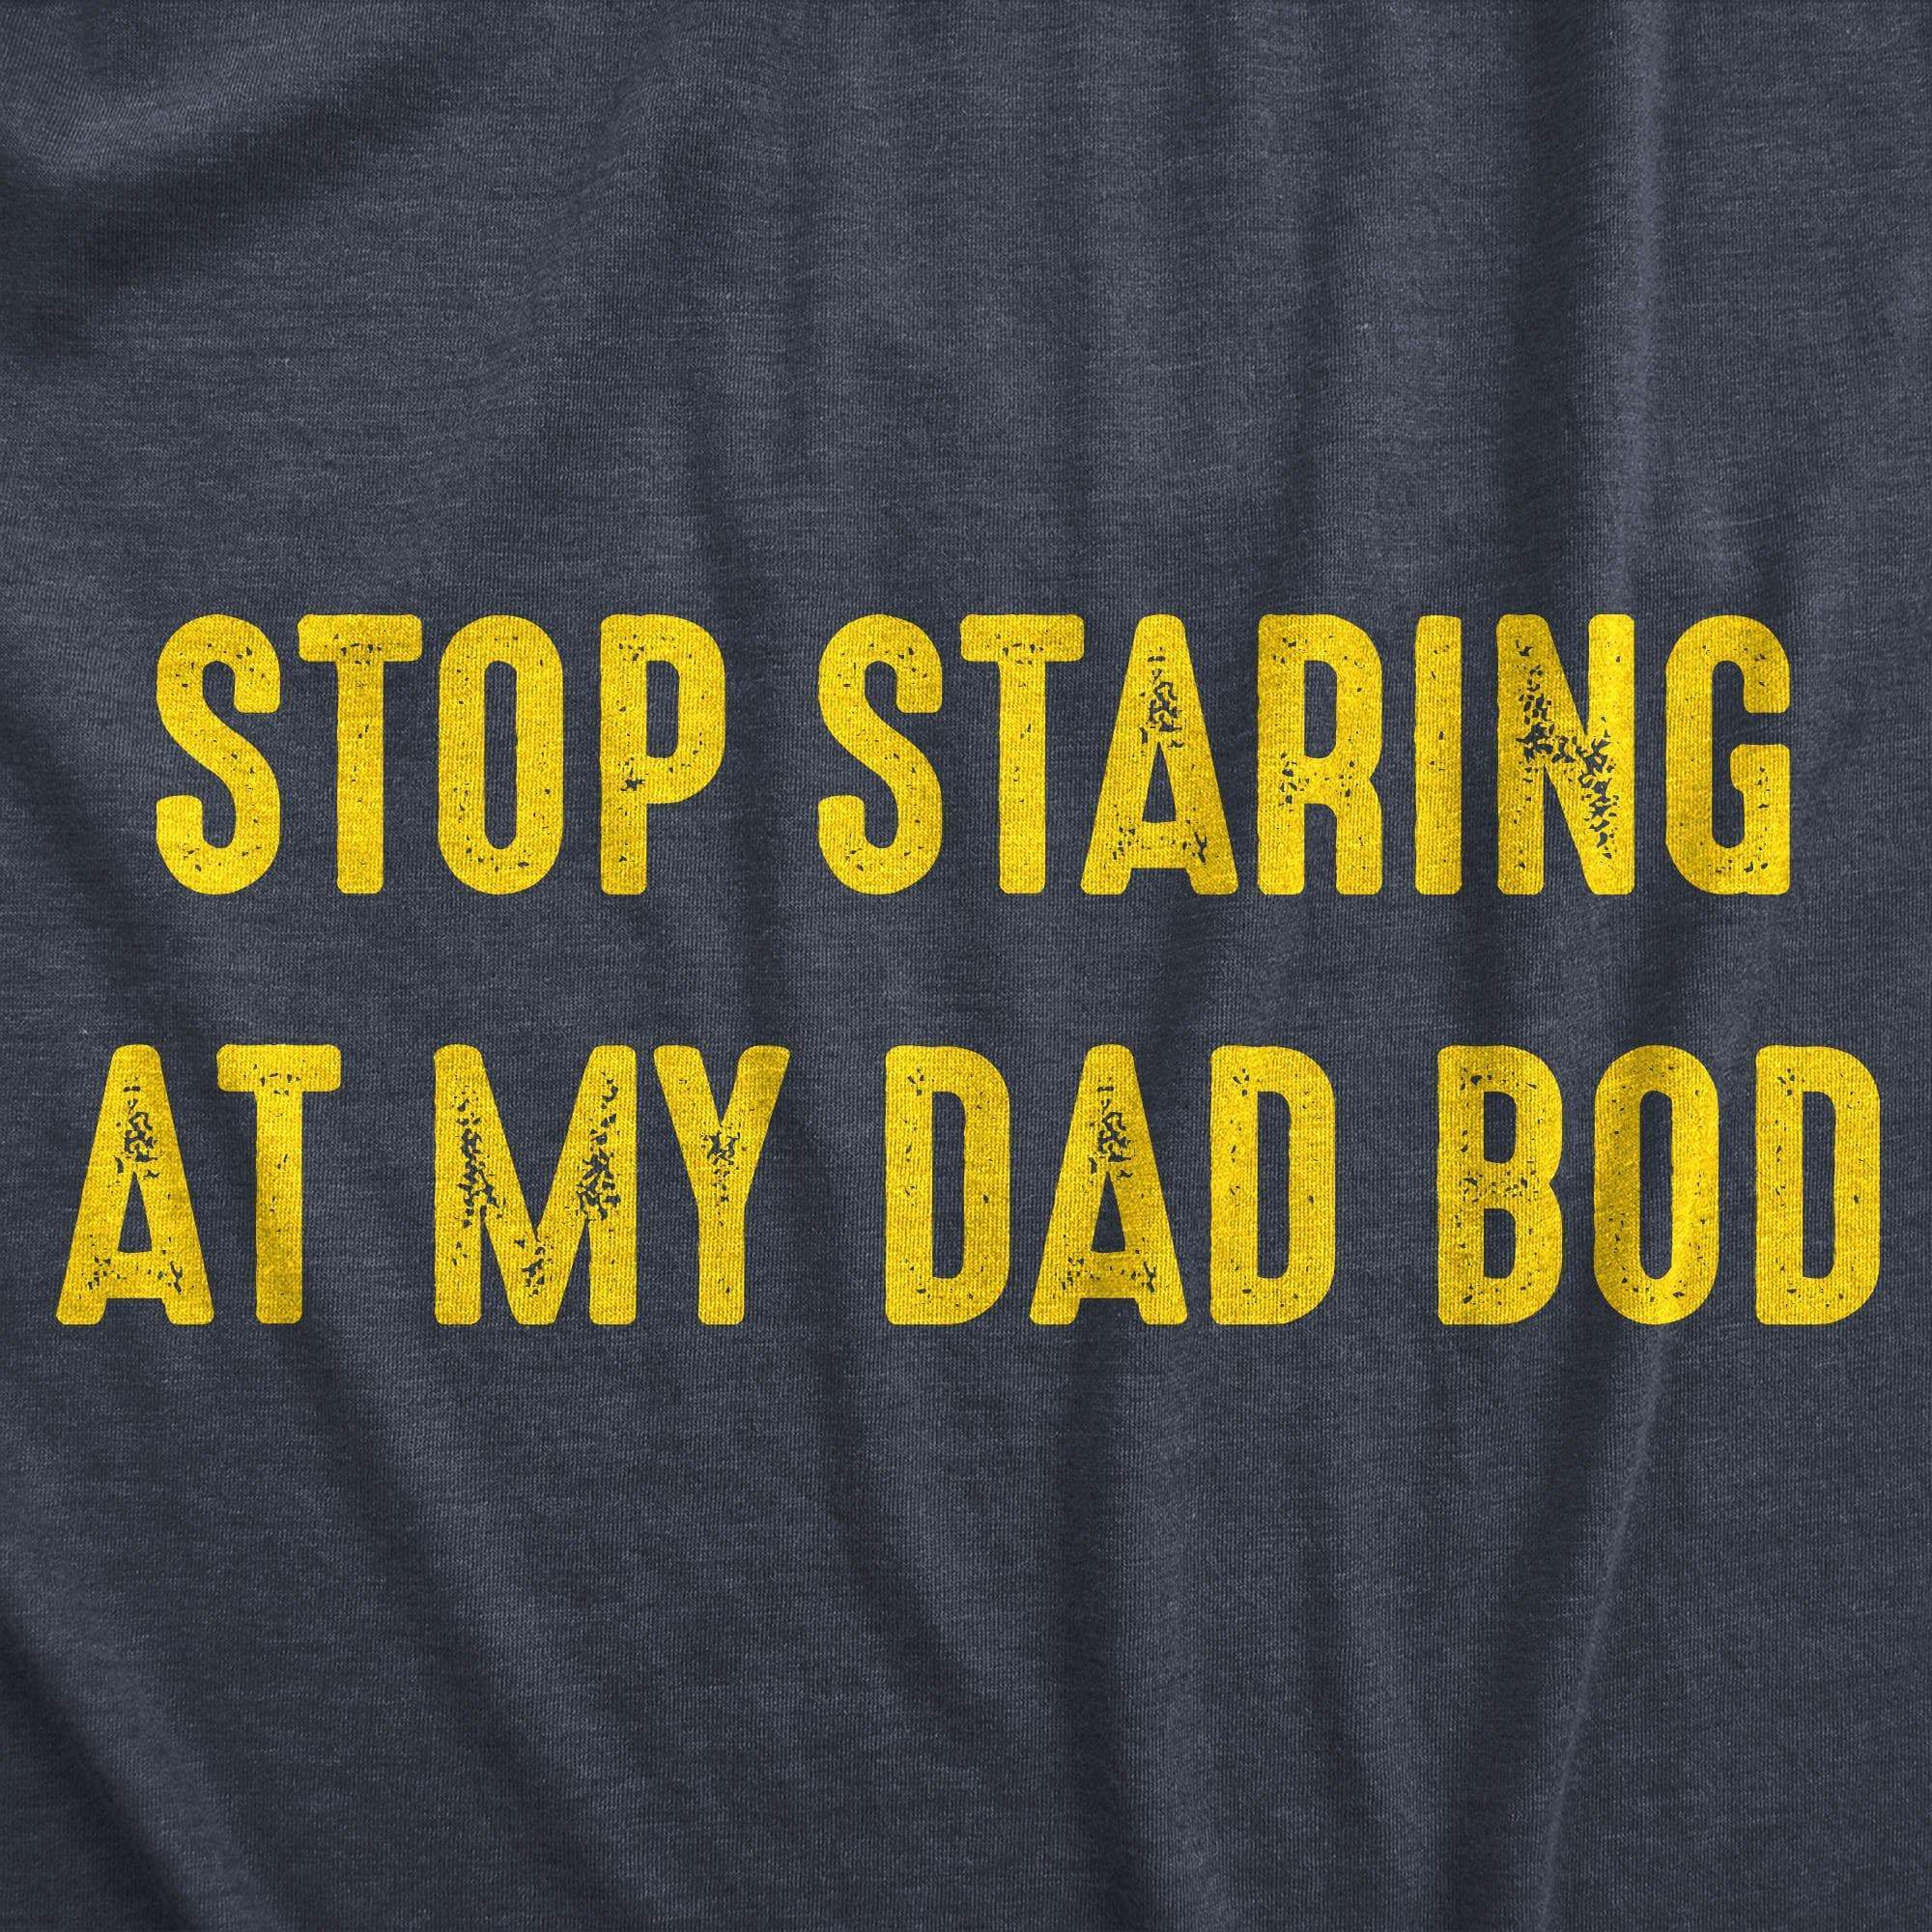 Stop Staring At My Dad Bod Men's Tshirt - Crazy Dog T-Shirts